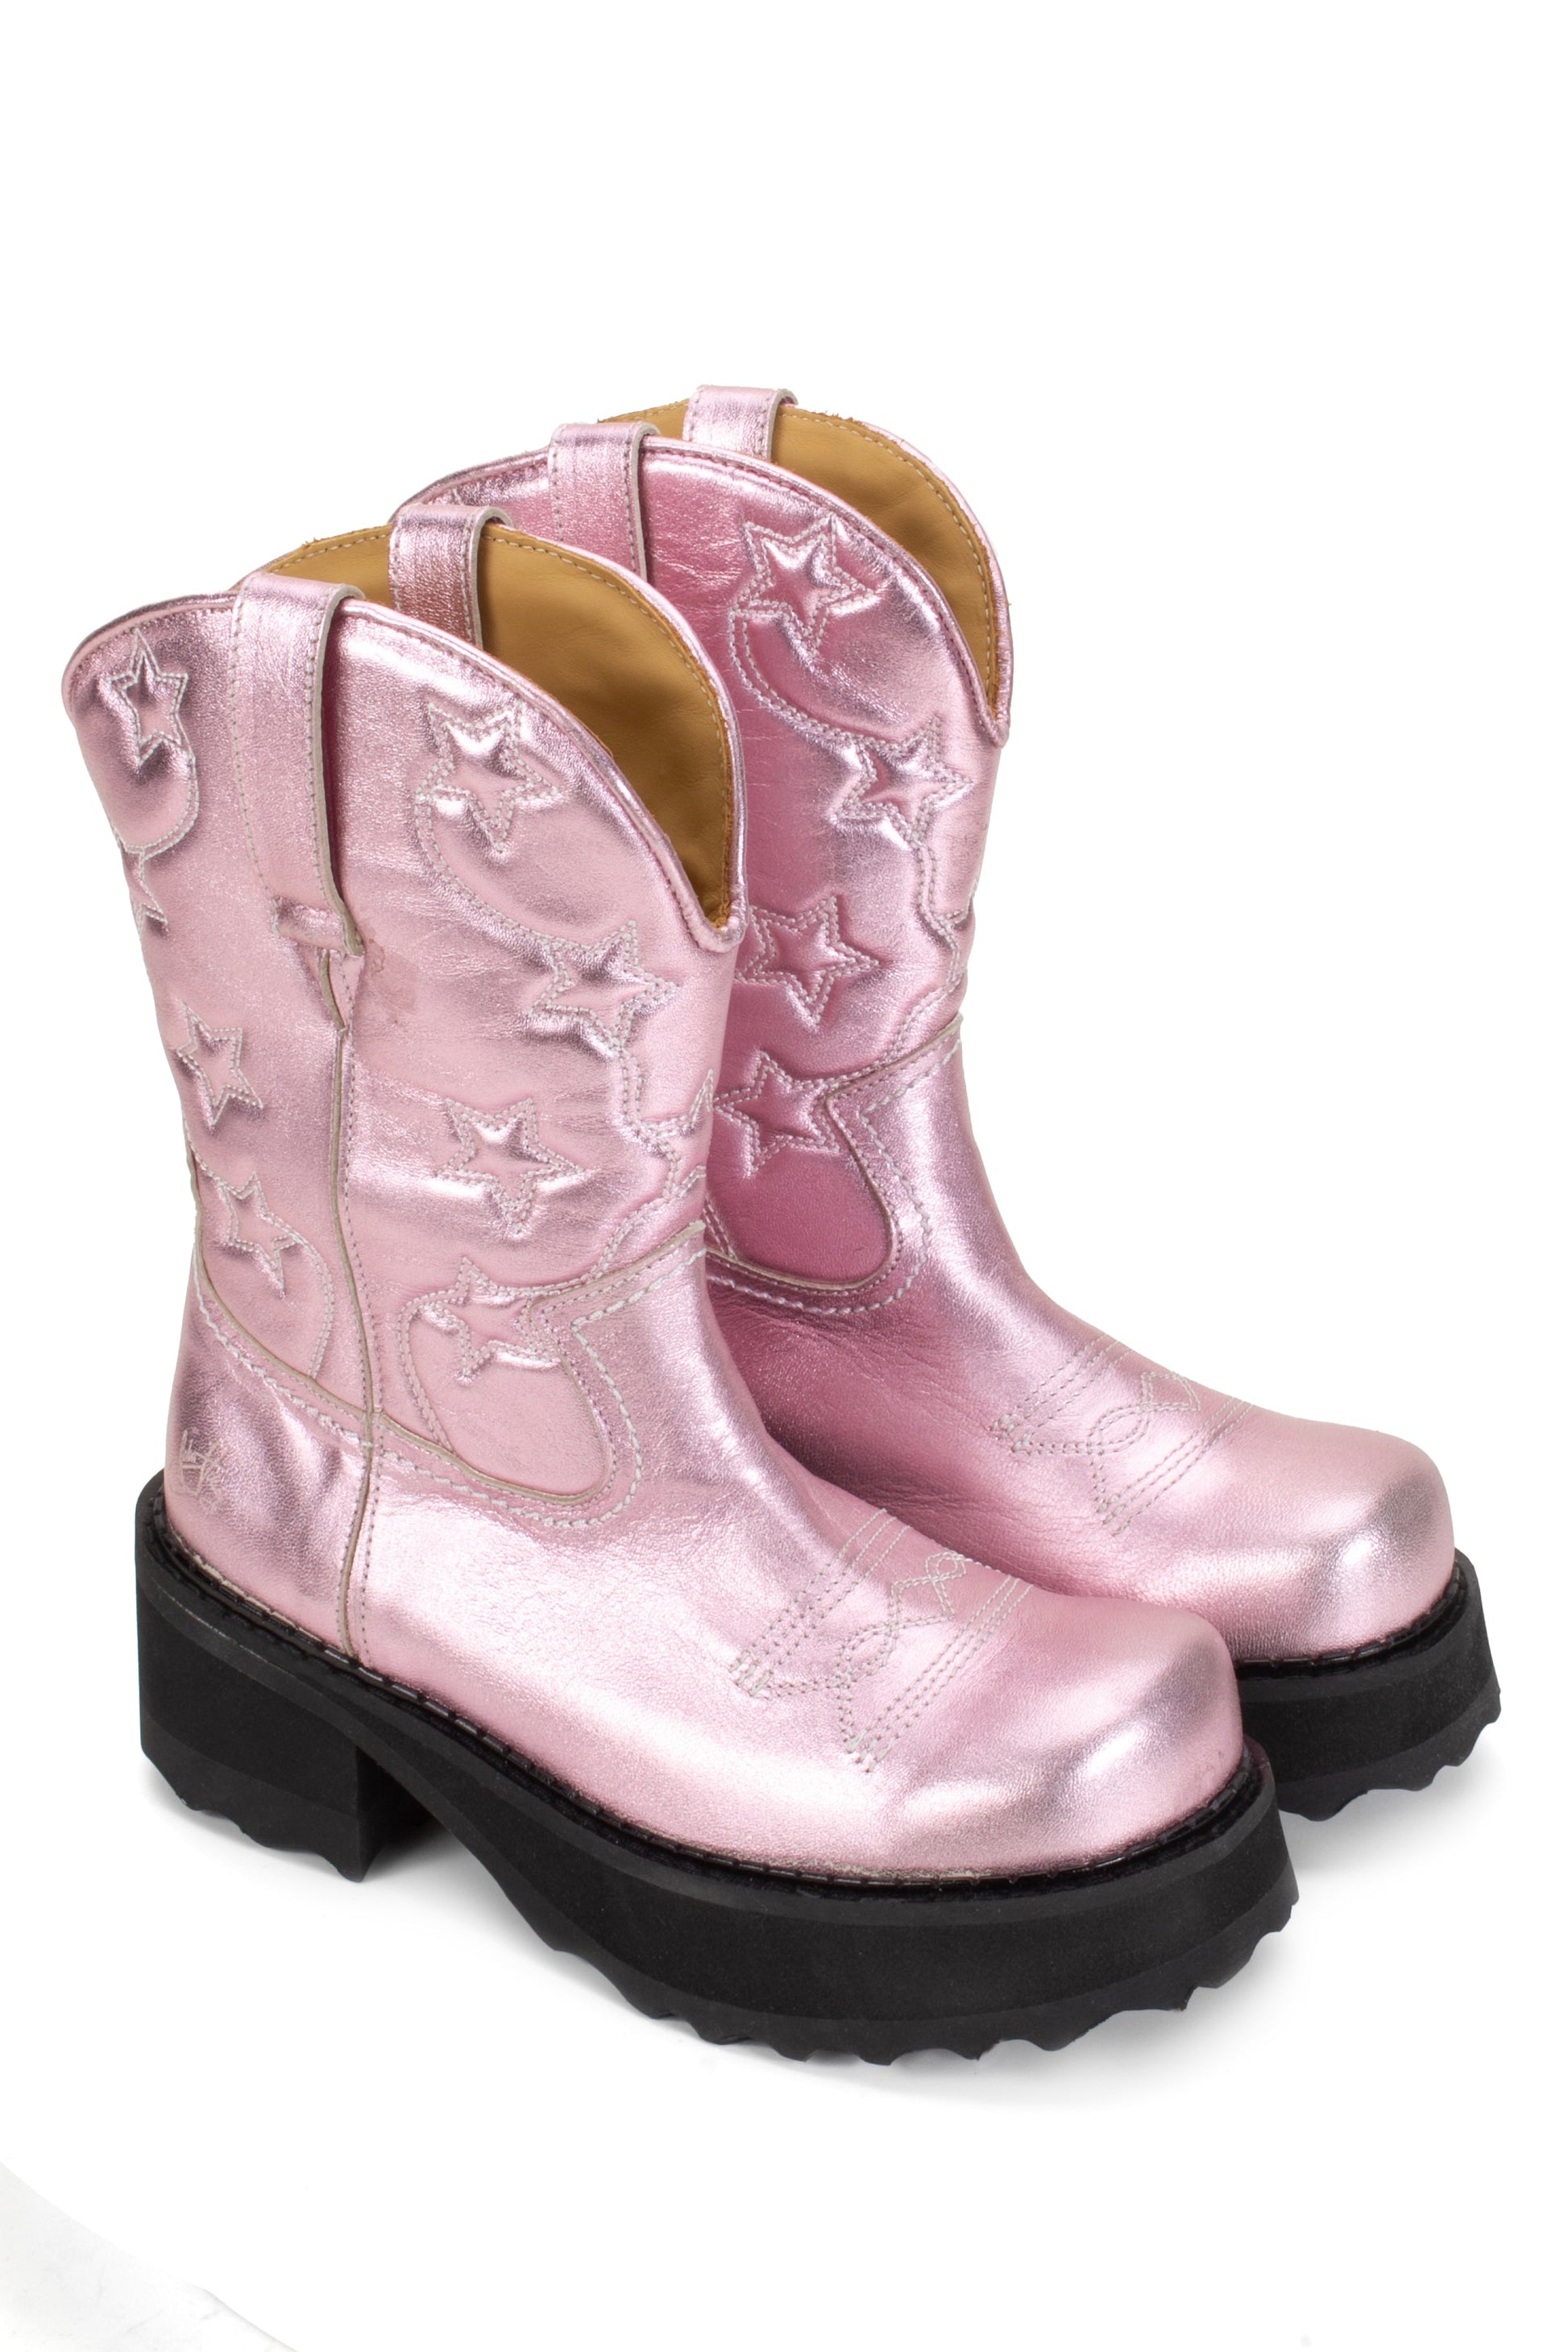 Anna Sui x John Fluevog Ankle Cowboy Boot 6